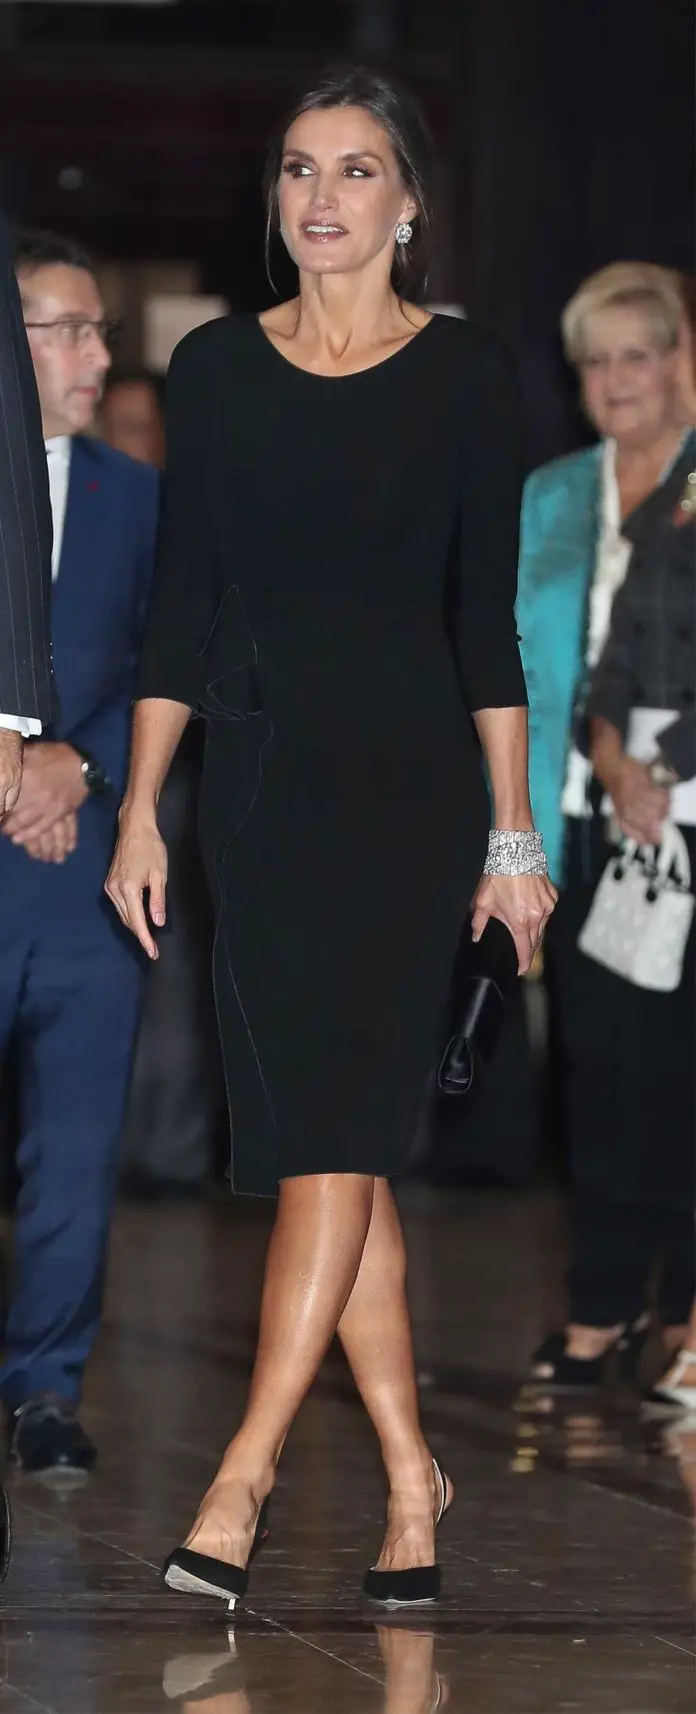 Queen Letizia in Black Armani Dress for Princess of Asturias Awards Concert